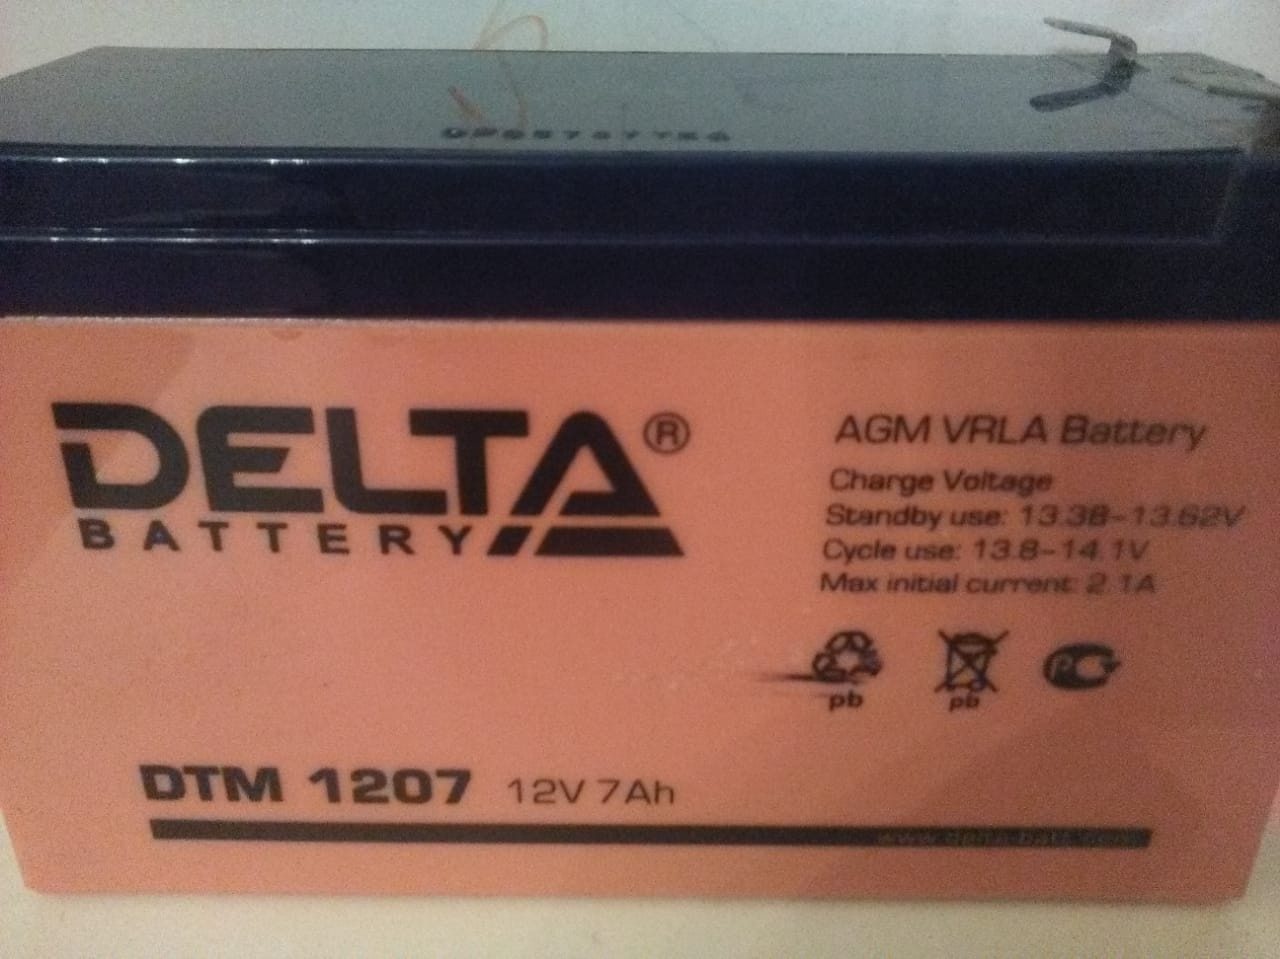 Батареи 12v 5ah. Аккумуляторная батарея Delta DT 12100 (12v / 100ah). Дельта аккумулятор 12v 7ah. Батарея Delta DT 1207 (12v, 7ah) <DT 1207>. Delta DTM 1207 12v.